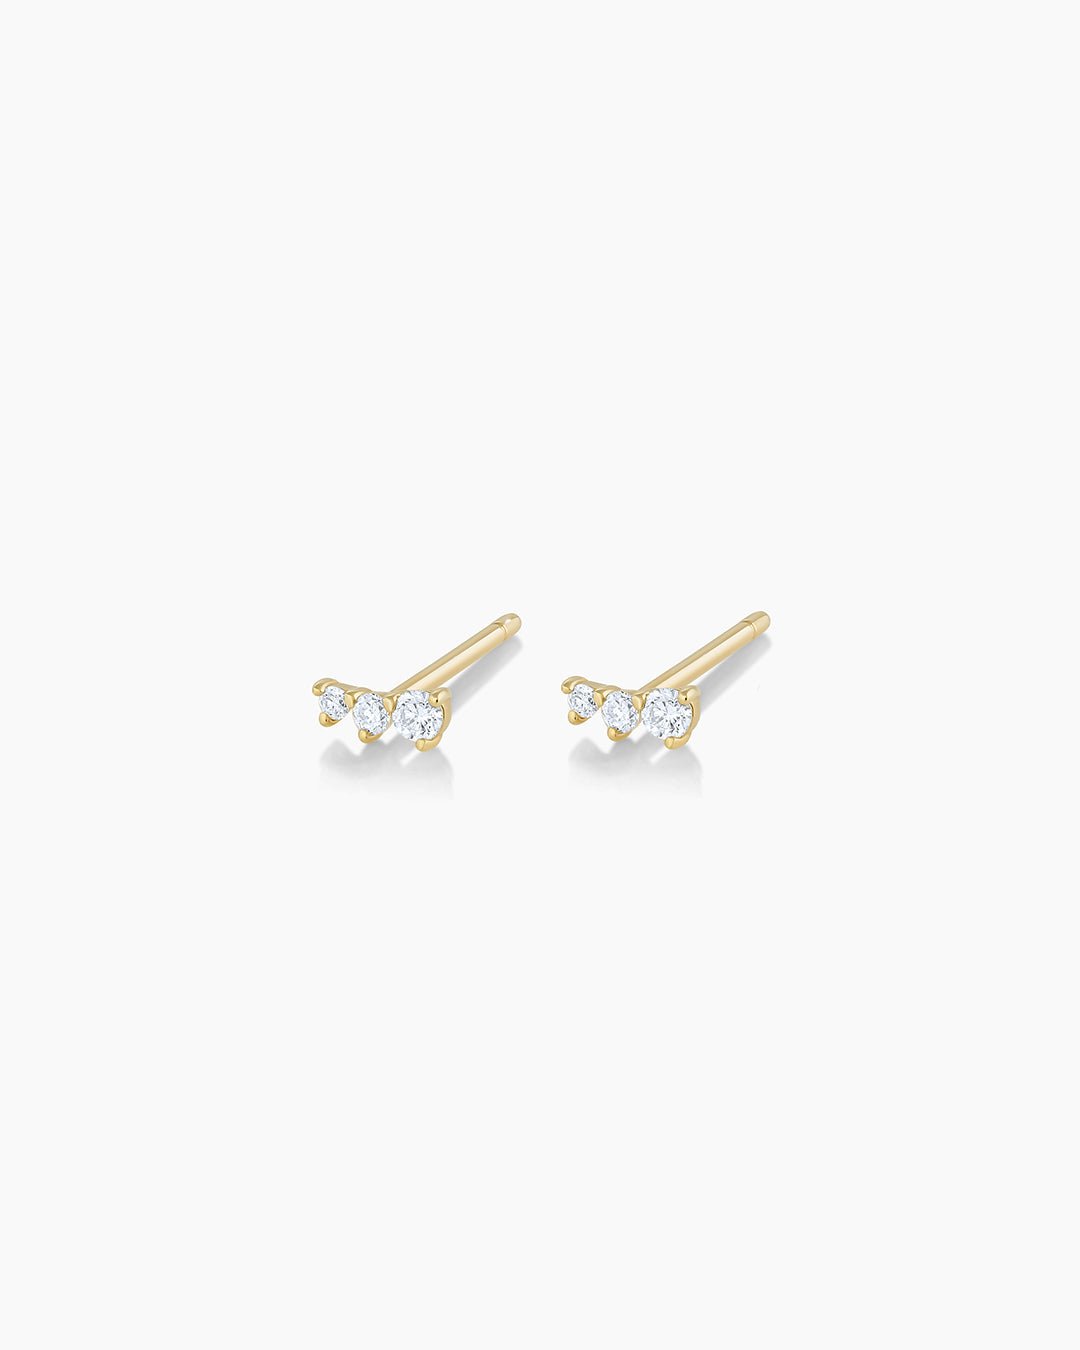 Diamond Cluster StudsDiamond trio studsDiamond earrings || option::14k Solid Gold